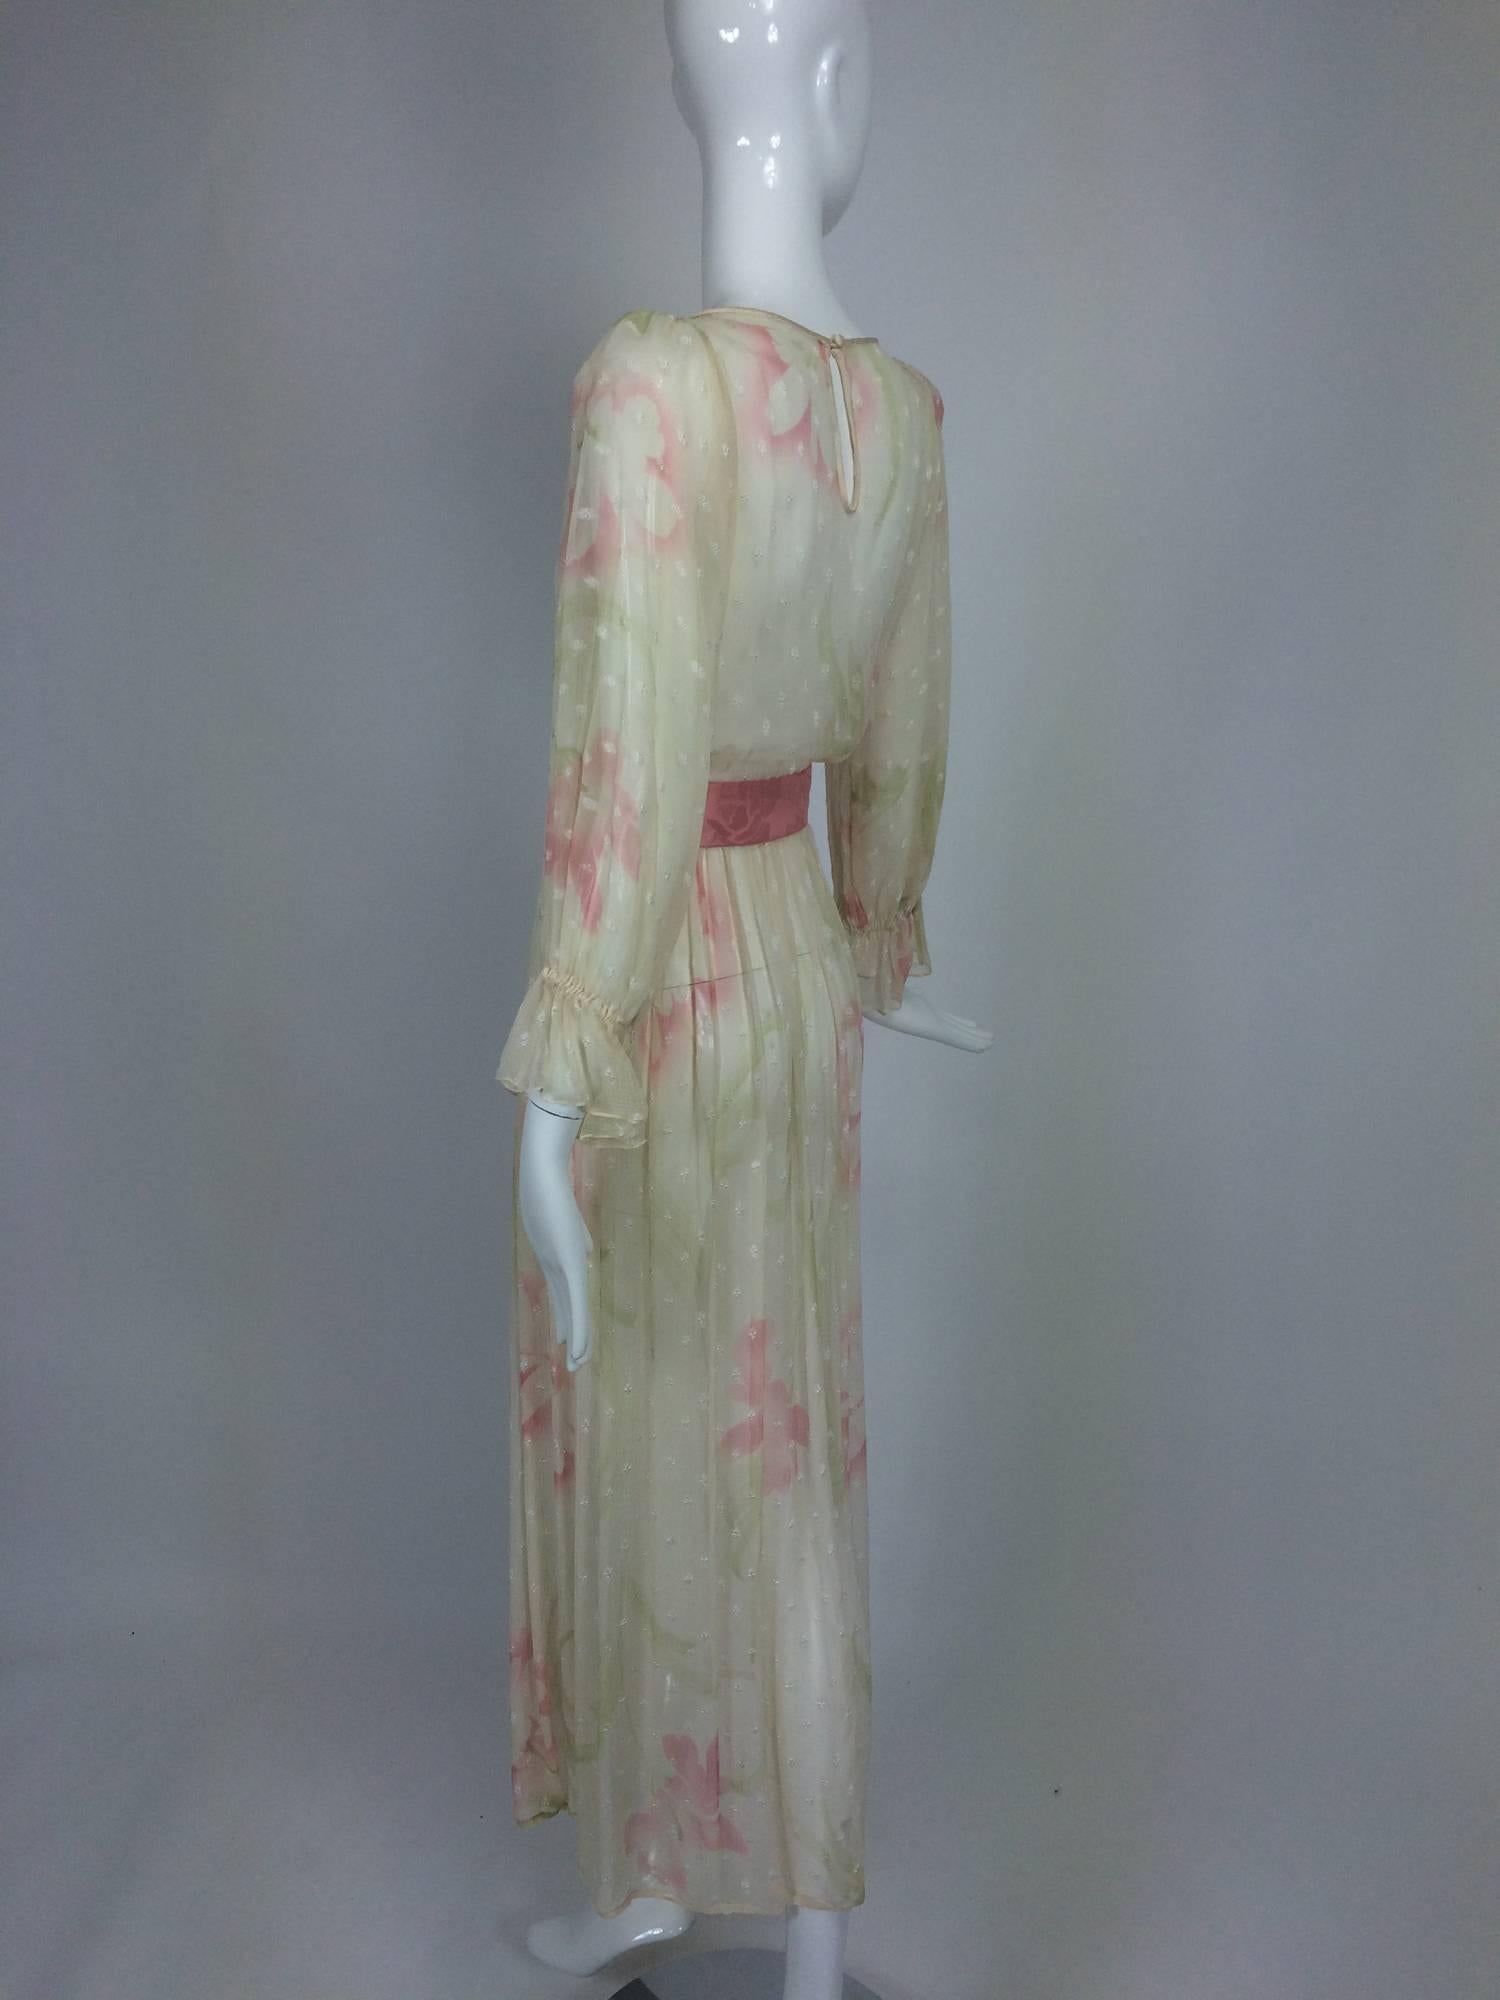 Women's Vintage Hollys Harp off white sheer silk chiffon floral print dress 1960s